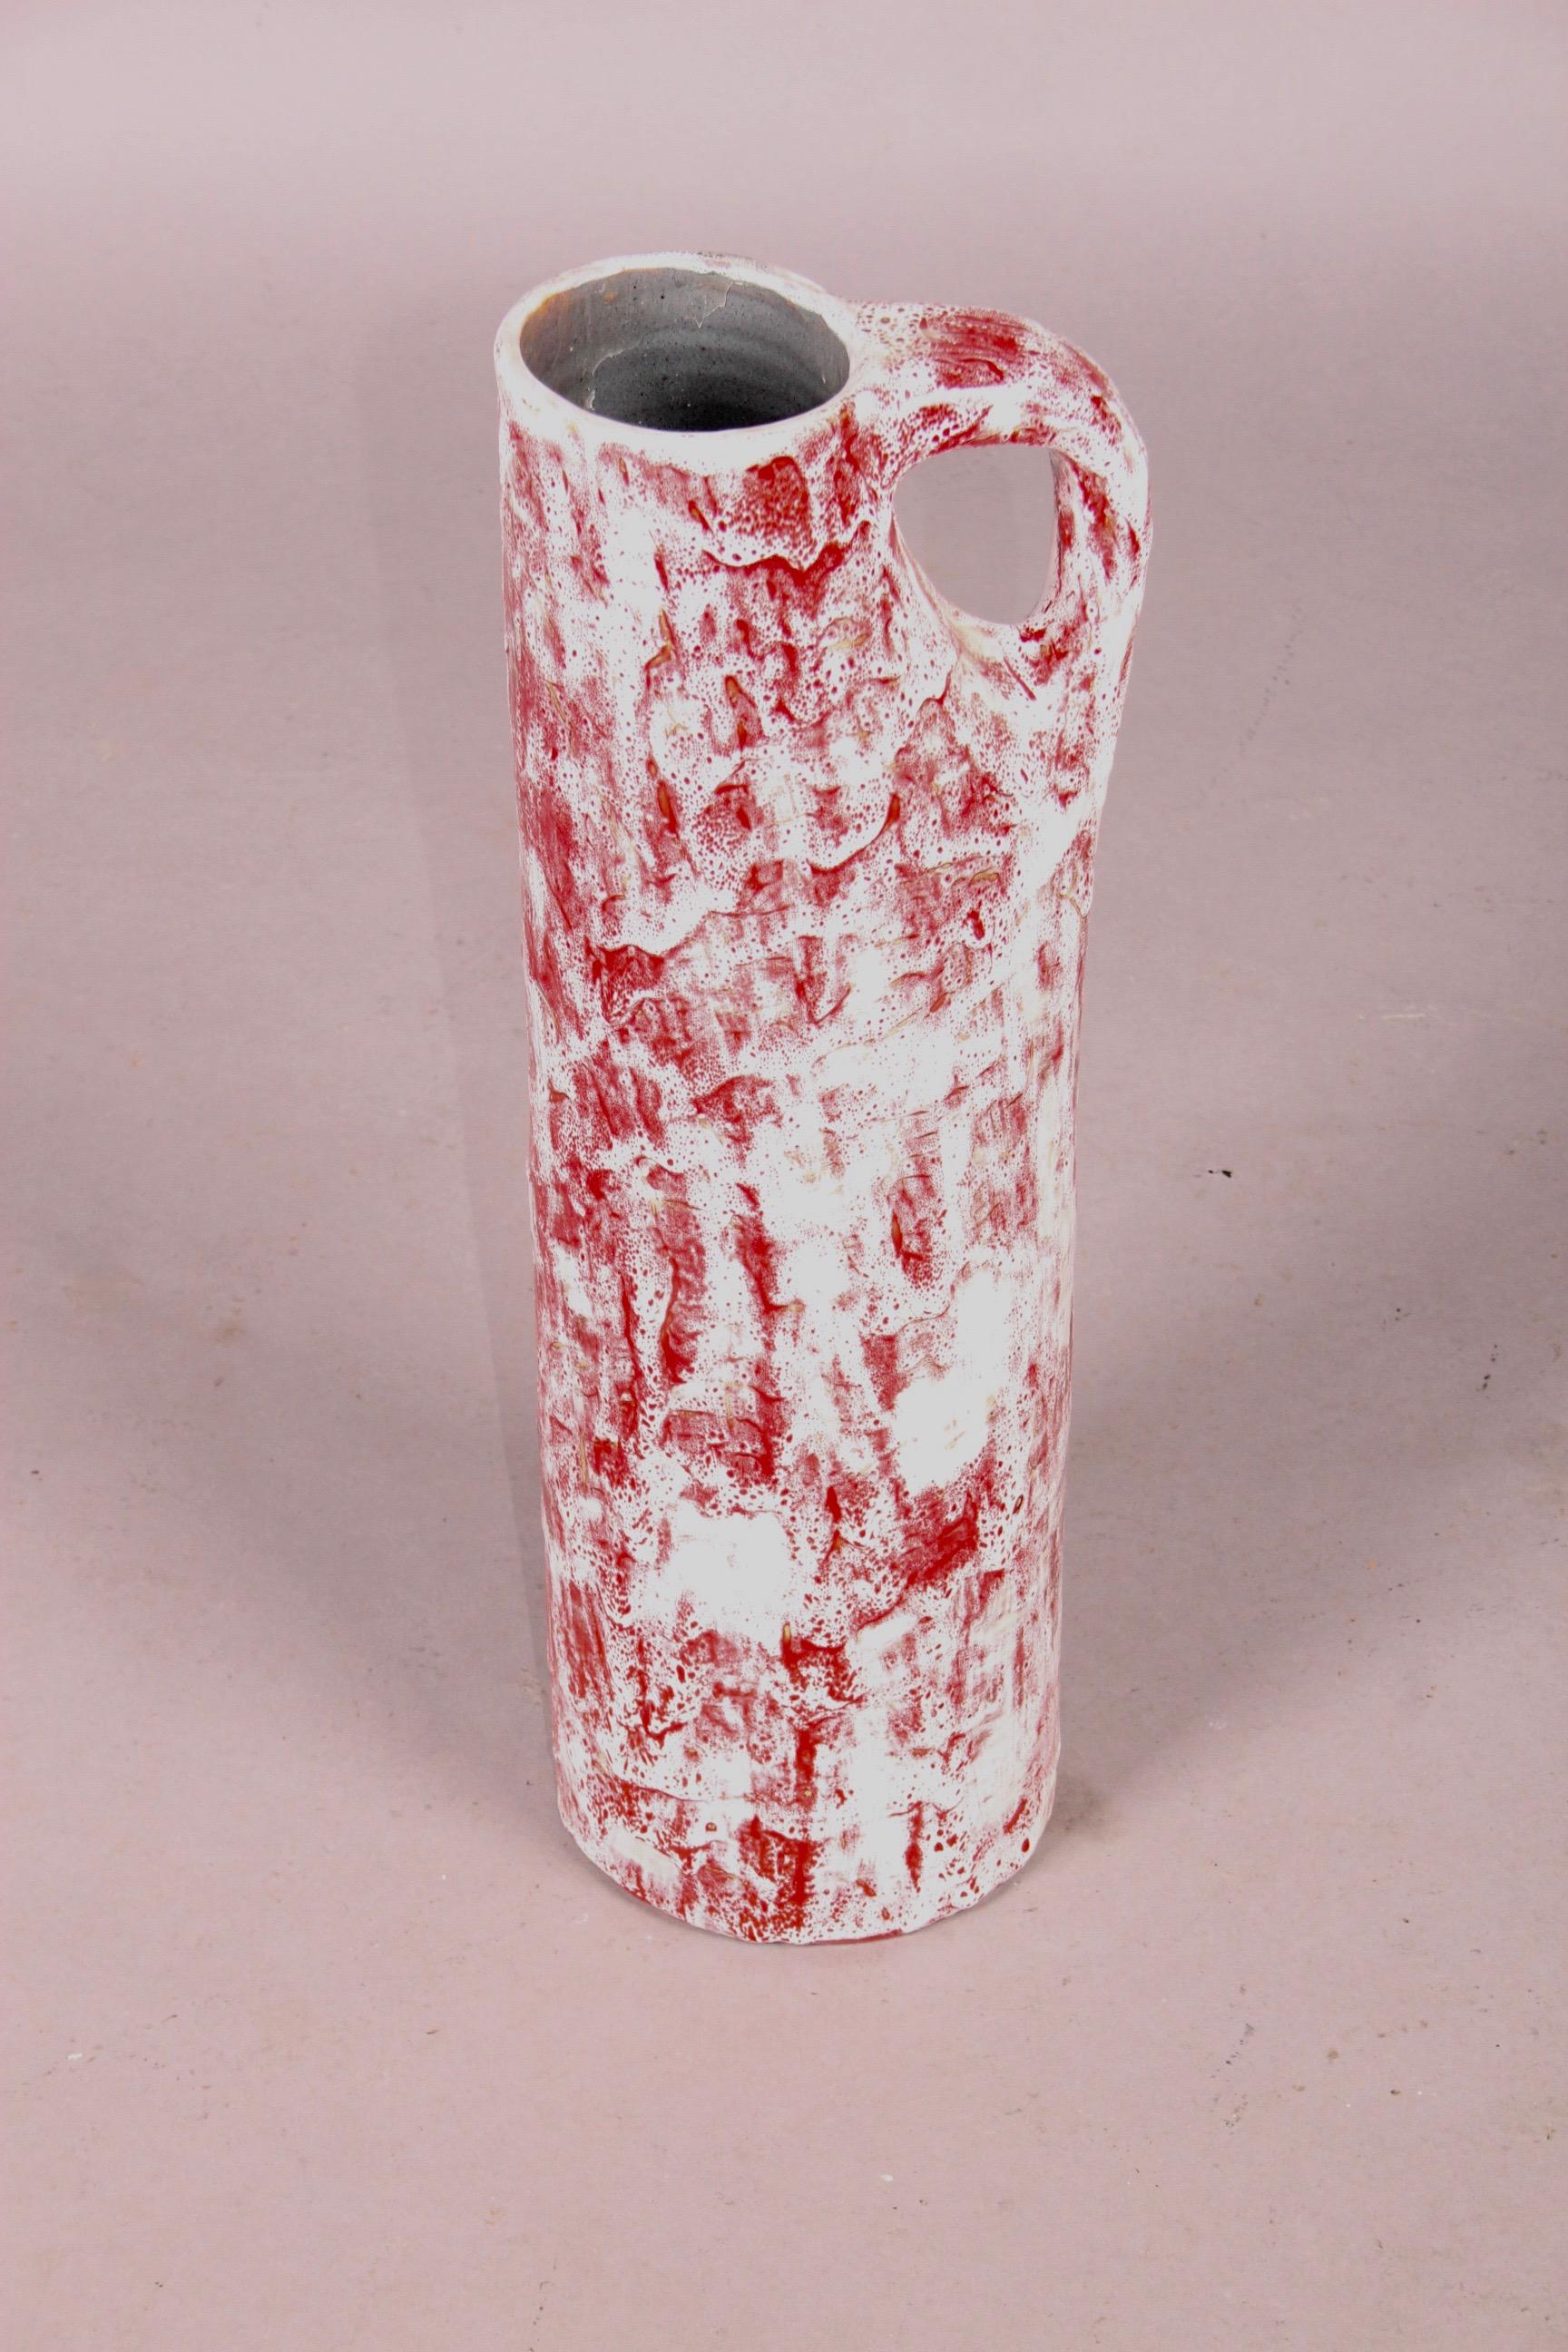 Ceramic pitcher by J, Linsig.